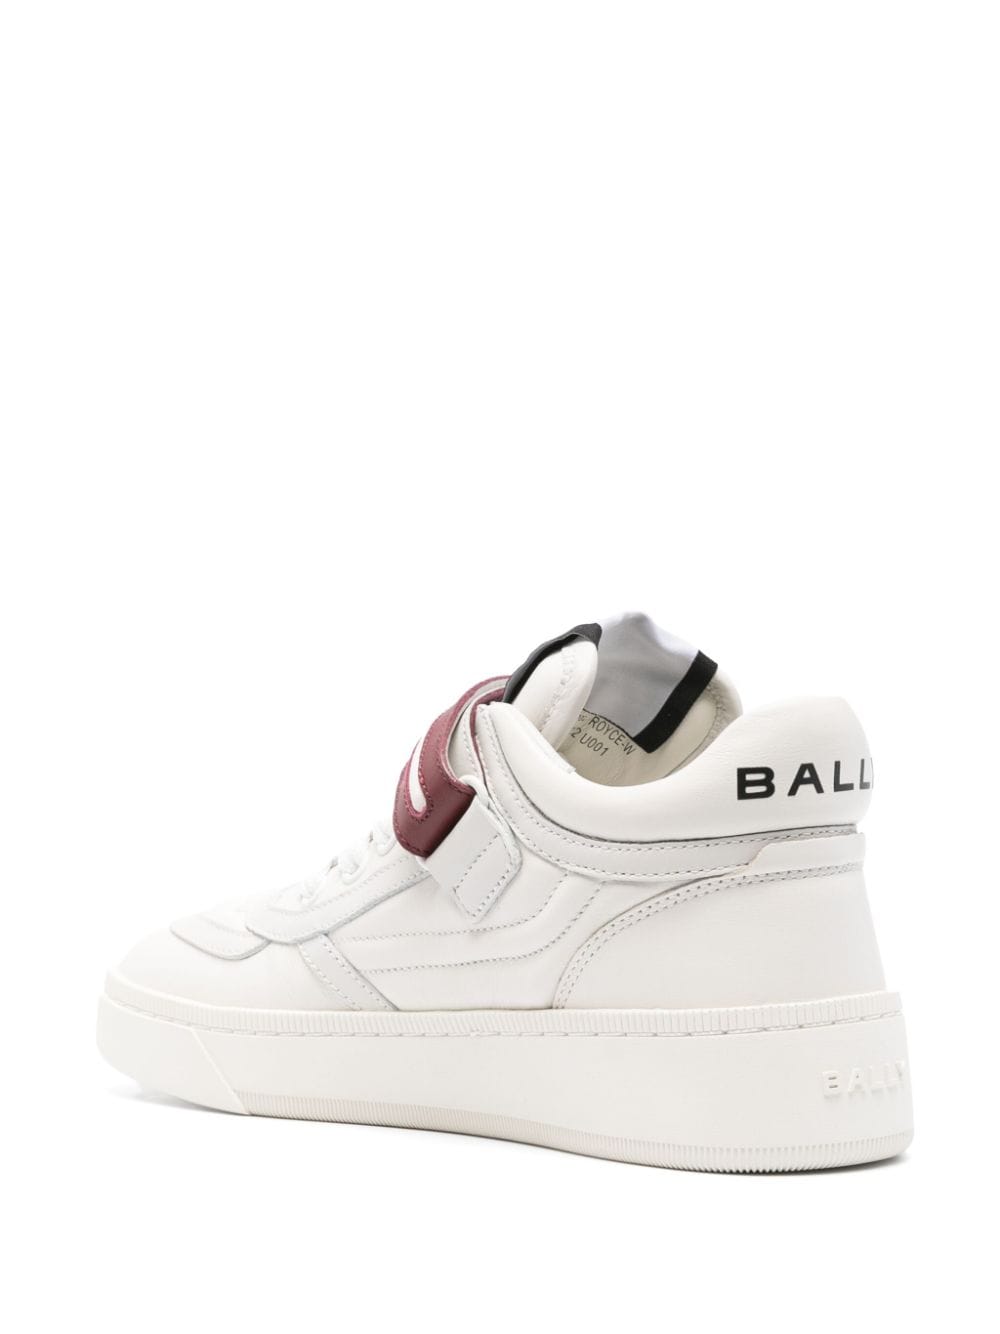 Bally Sneakers White-Bally-Urbanheer